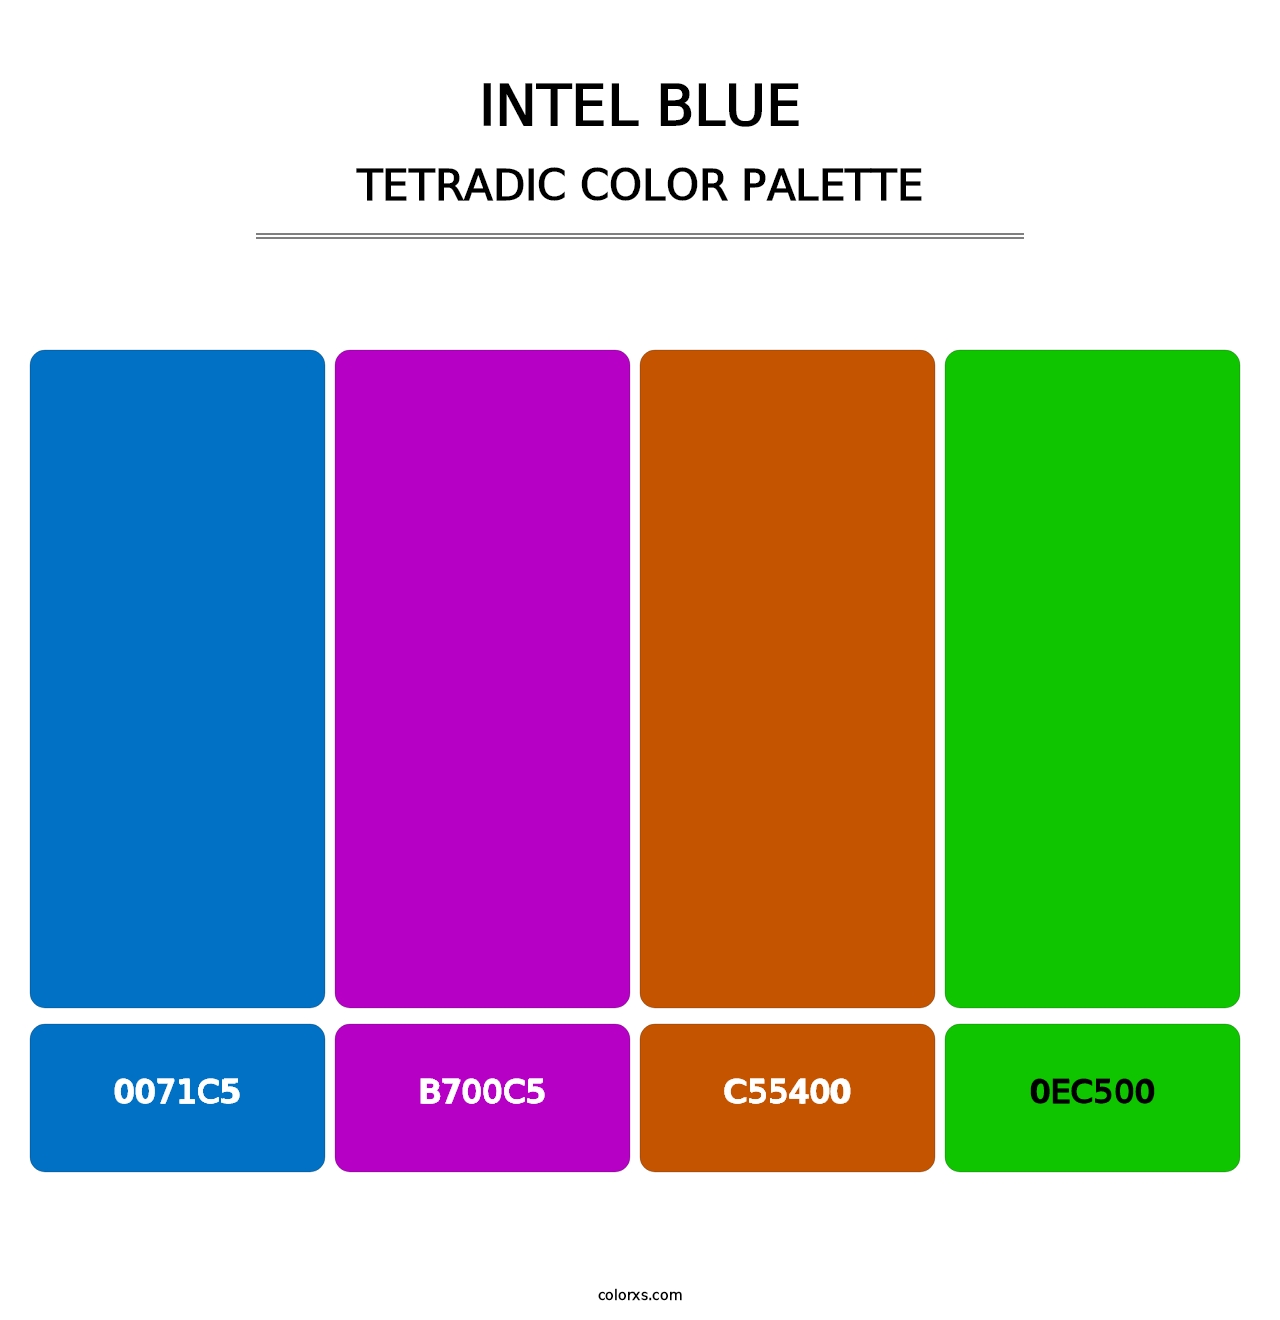 Intel Blue - Tetradic Color Palette